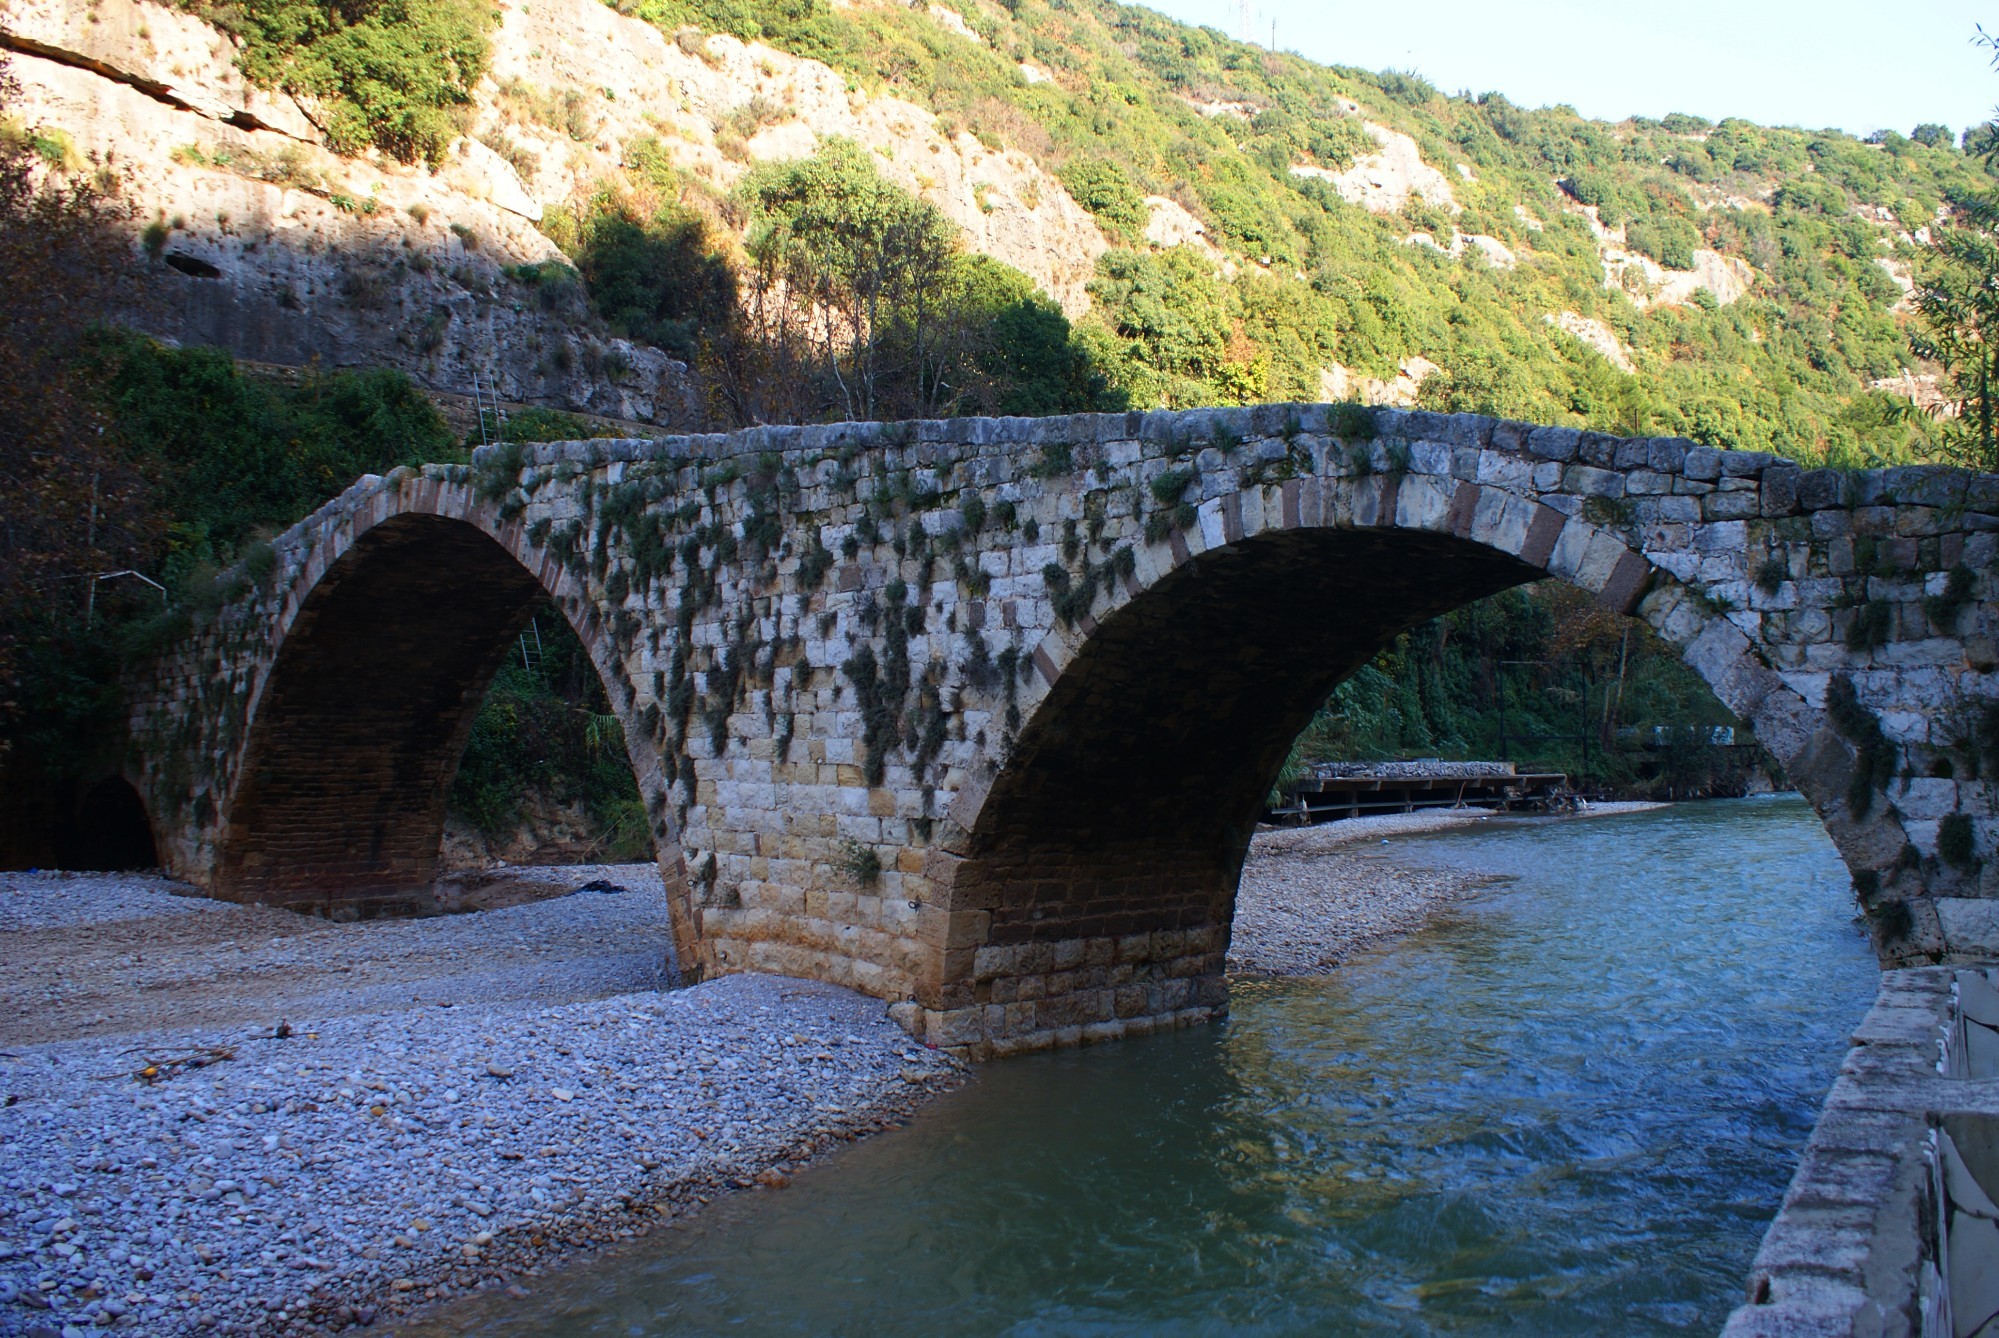 Old Osman bridge near Beirut<br/>
Старый османский мост недалеко от Бейрута